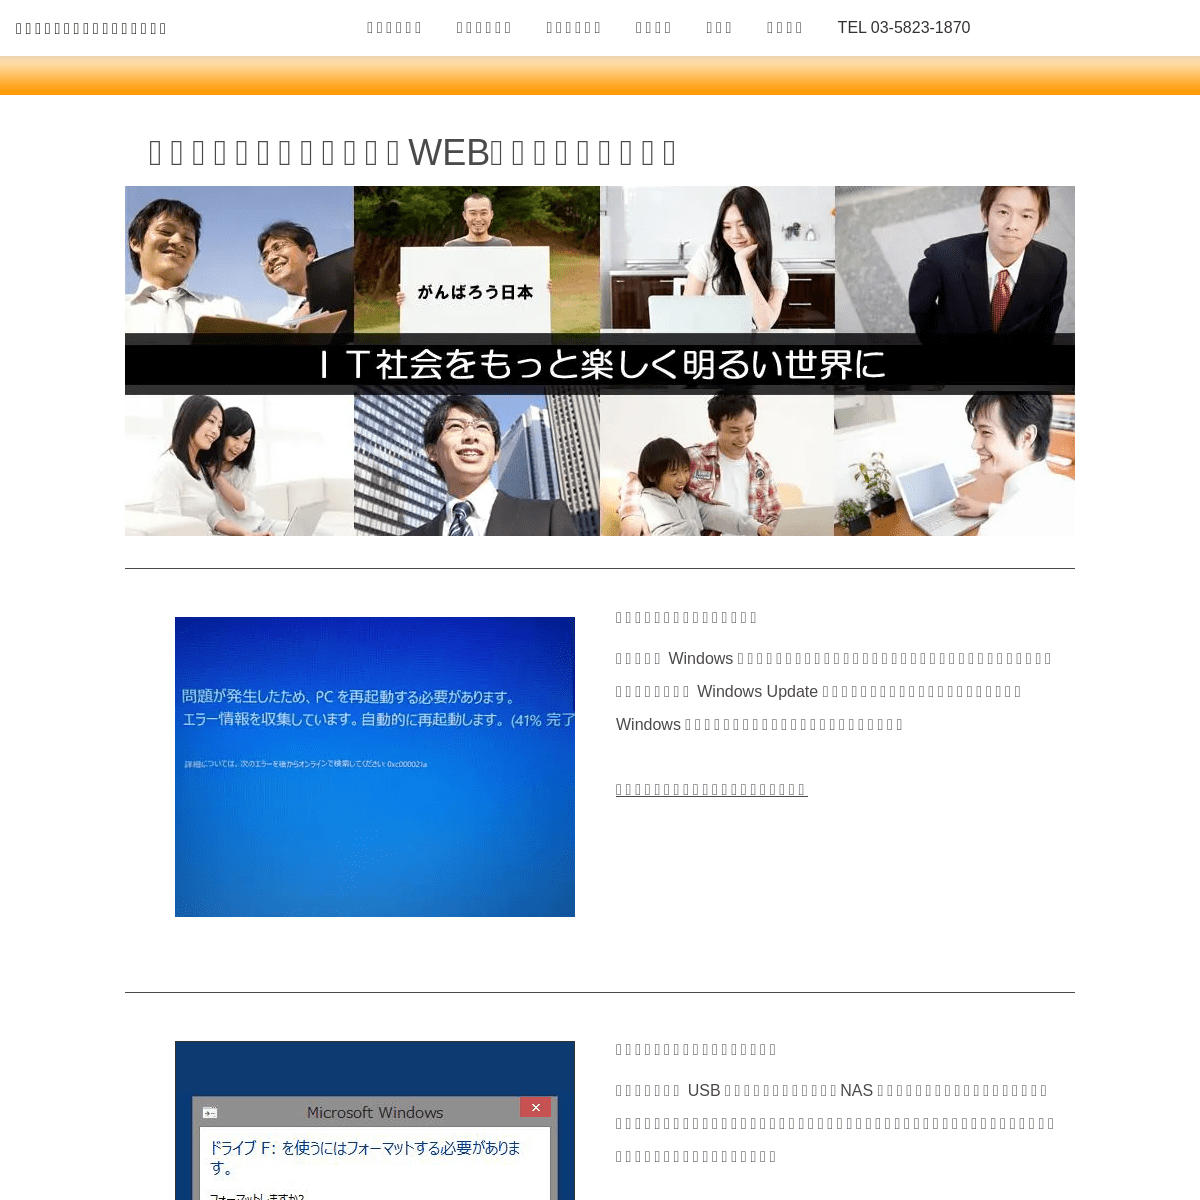 A complete backup of orange-ss.com